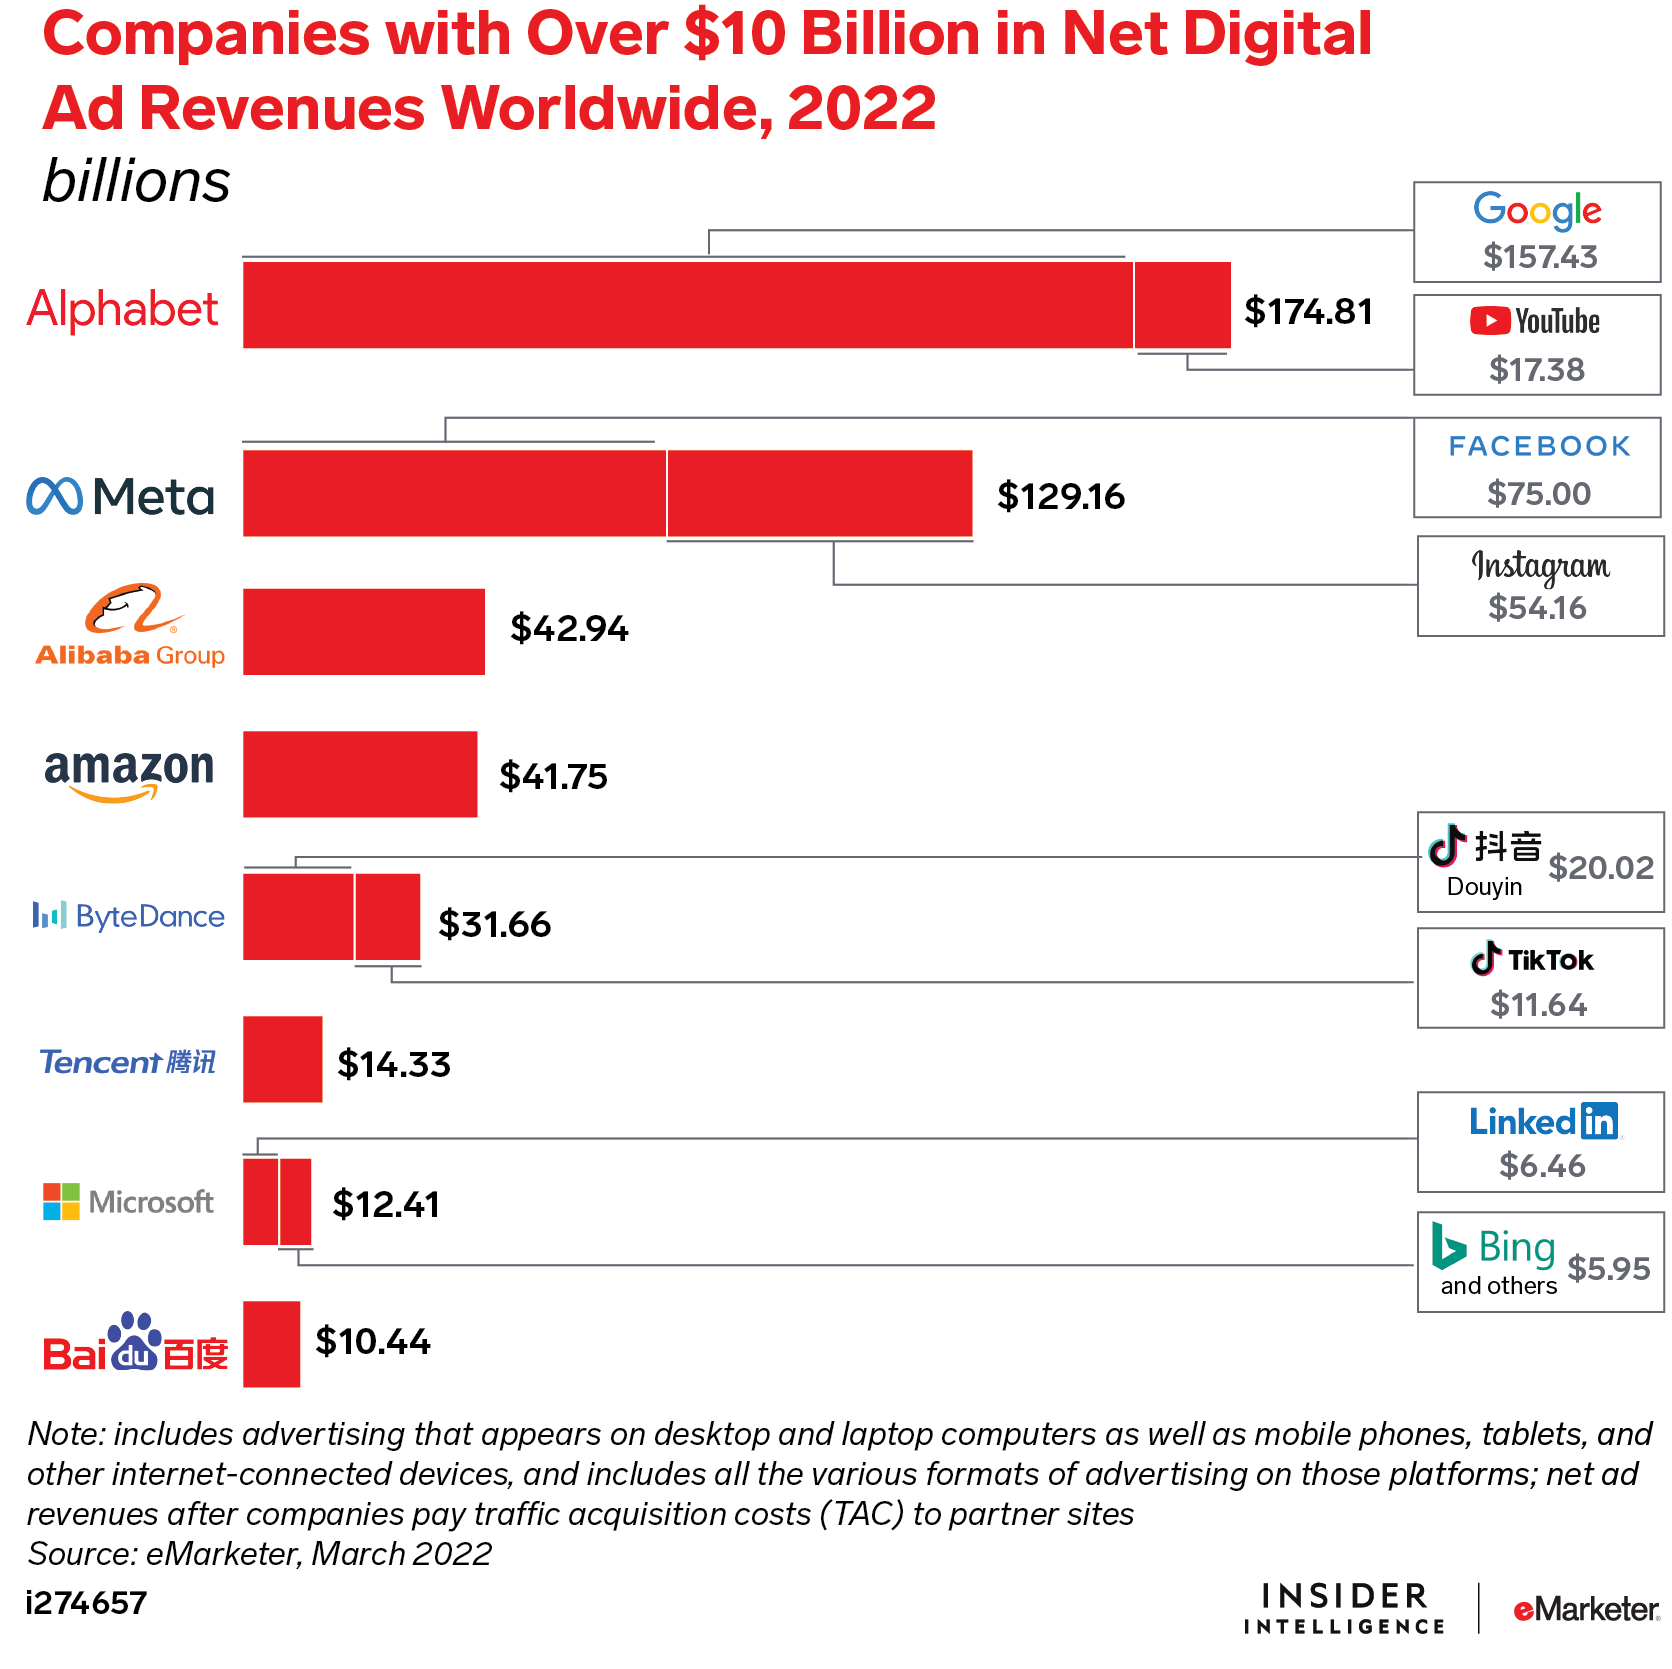 Companies with Over $10 Billion in Net Digital Ad Revenues Worldwide, 2022 (billions)